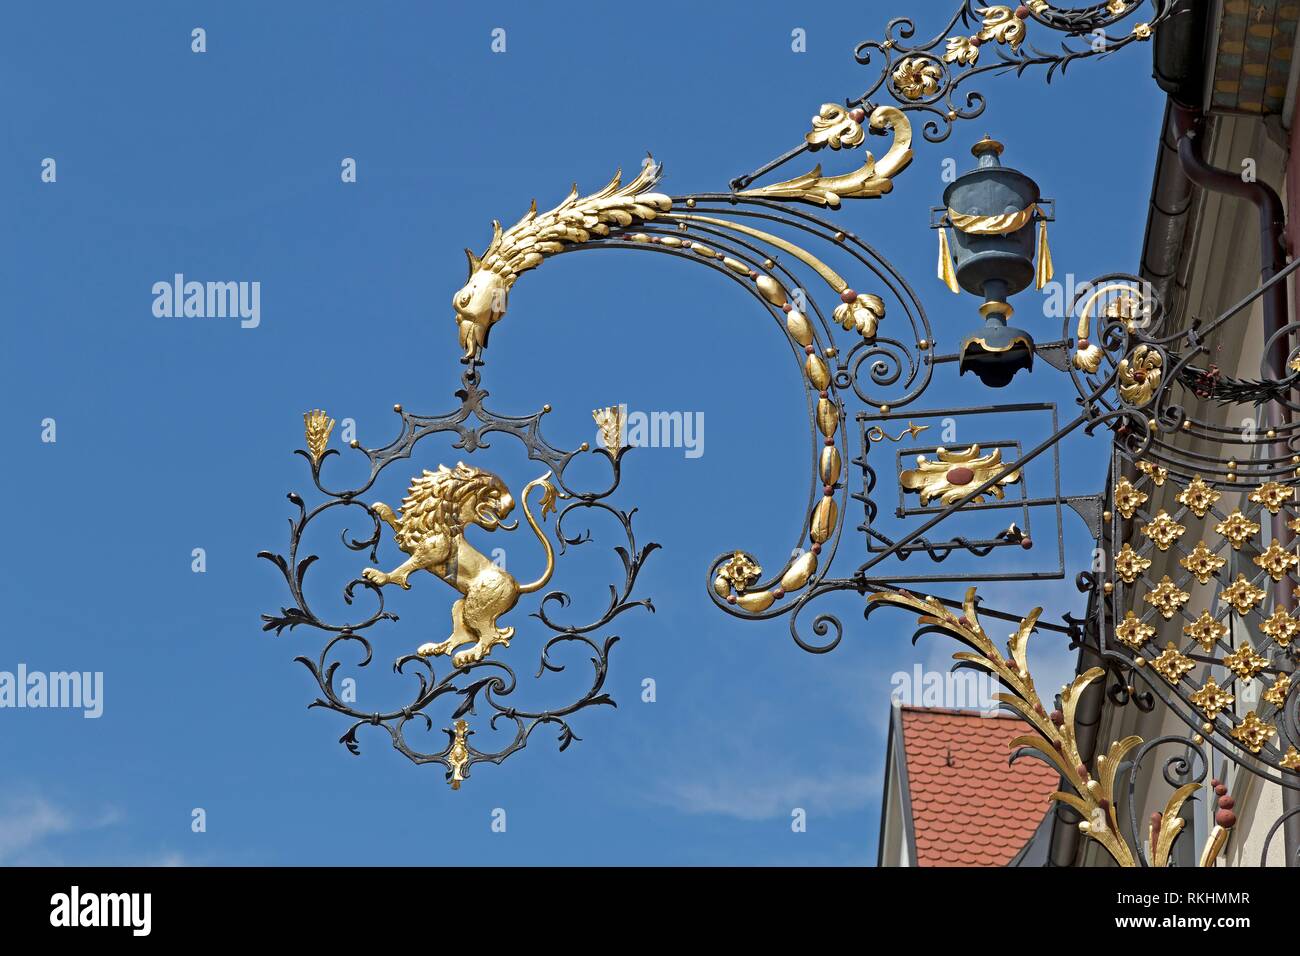 Wrought-iron hanging shop sign, Old Town, Wangen, Allgäu,  Baden-Württemberg, Germany Stock Photo - Alamy